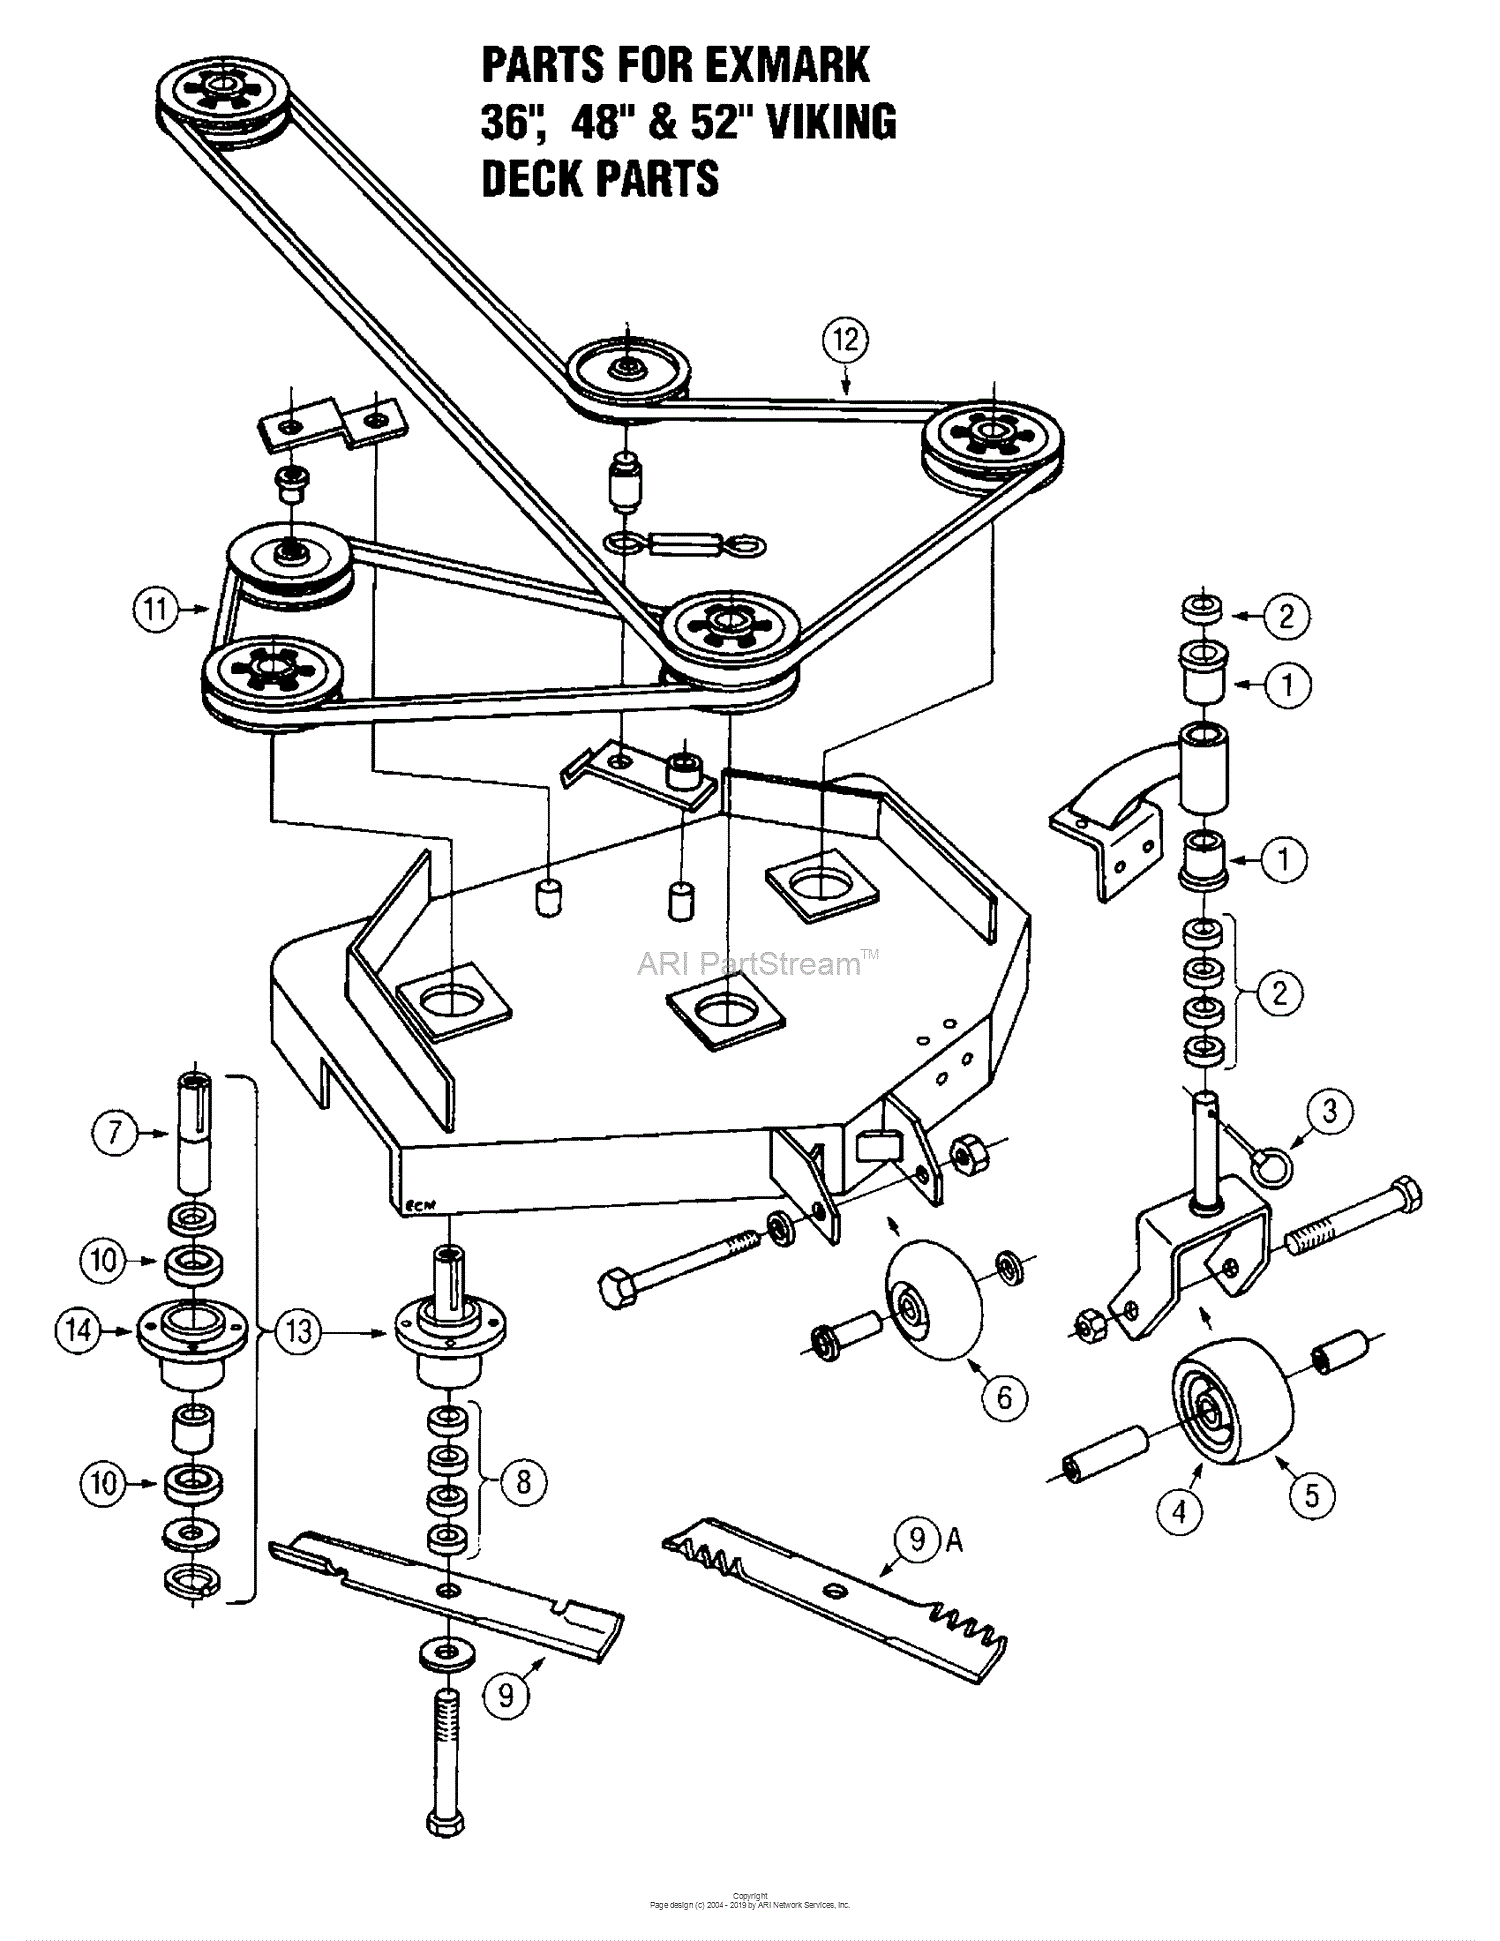 Oregon Exmark Parts Diagram for Exmark 36", 48", 52" Viking Deck Parts